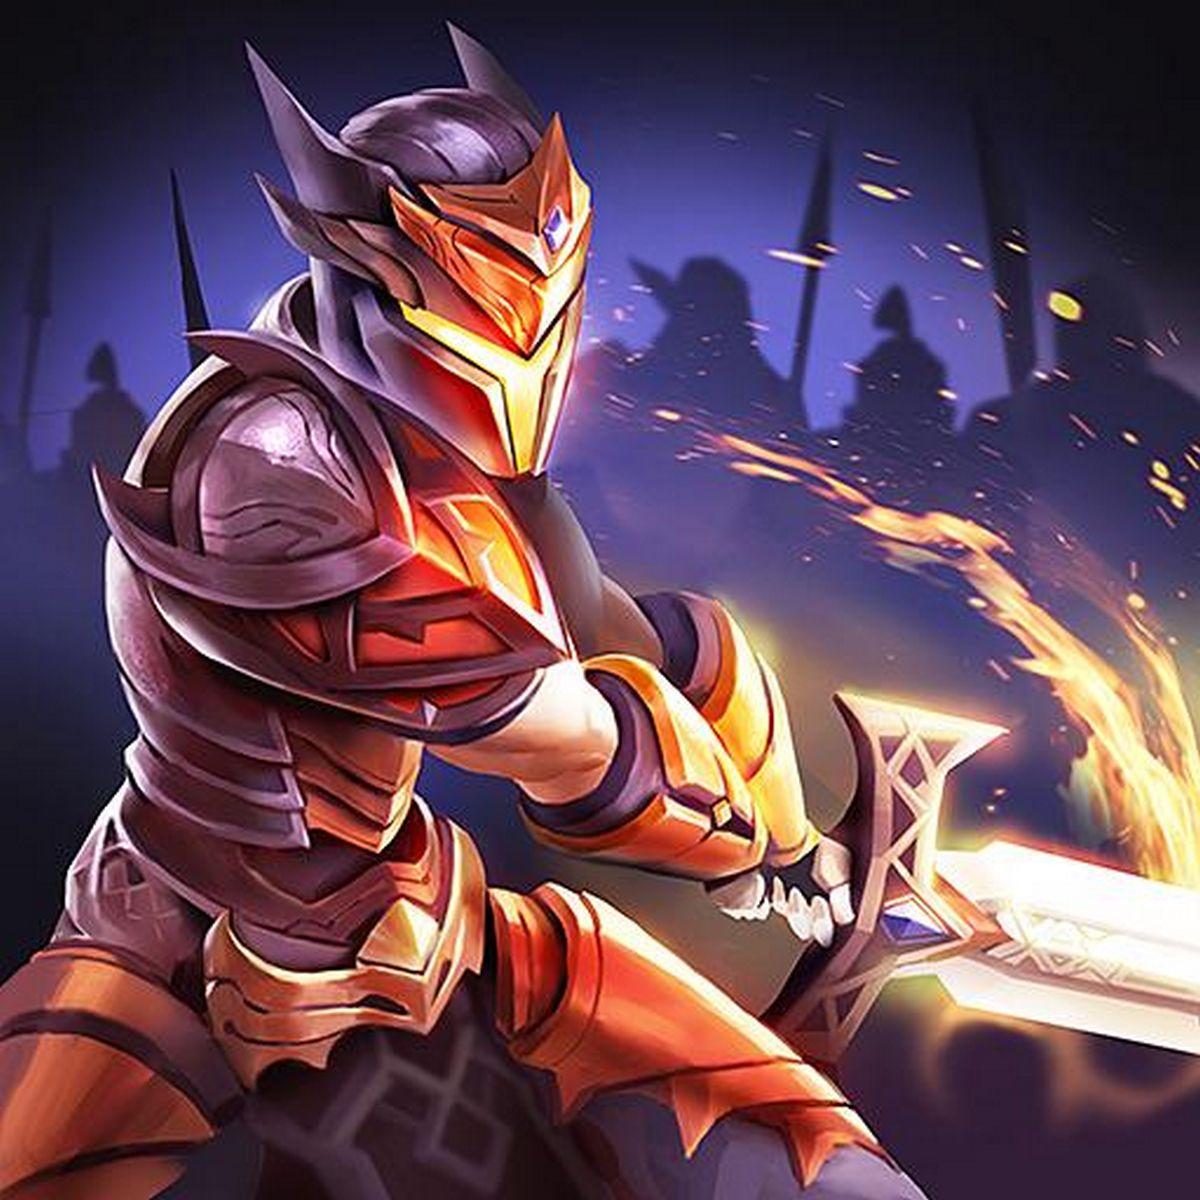 Epic Heroes War APK MOD v1.11.3.445 (Dinero infinito) icon